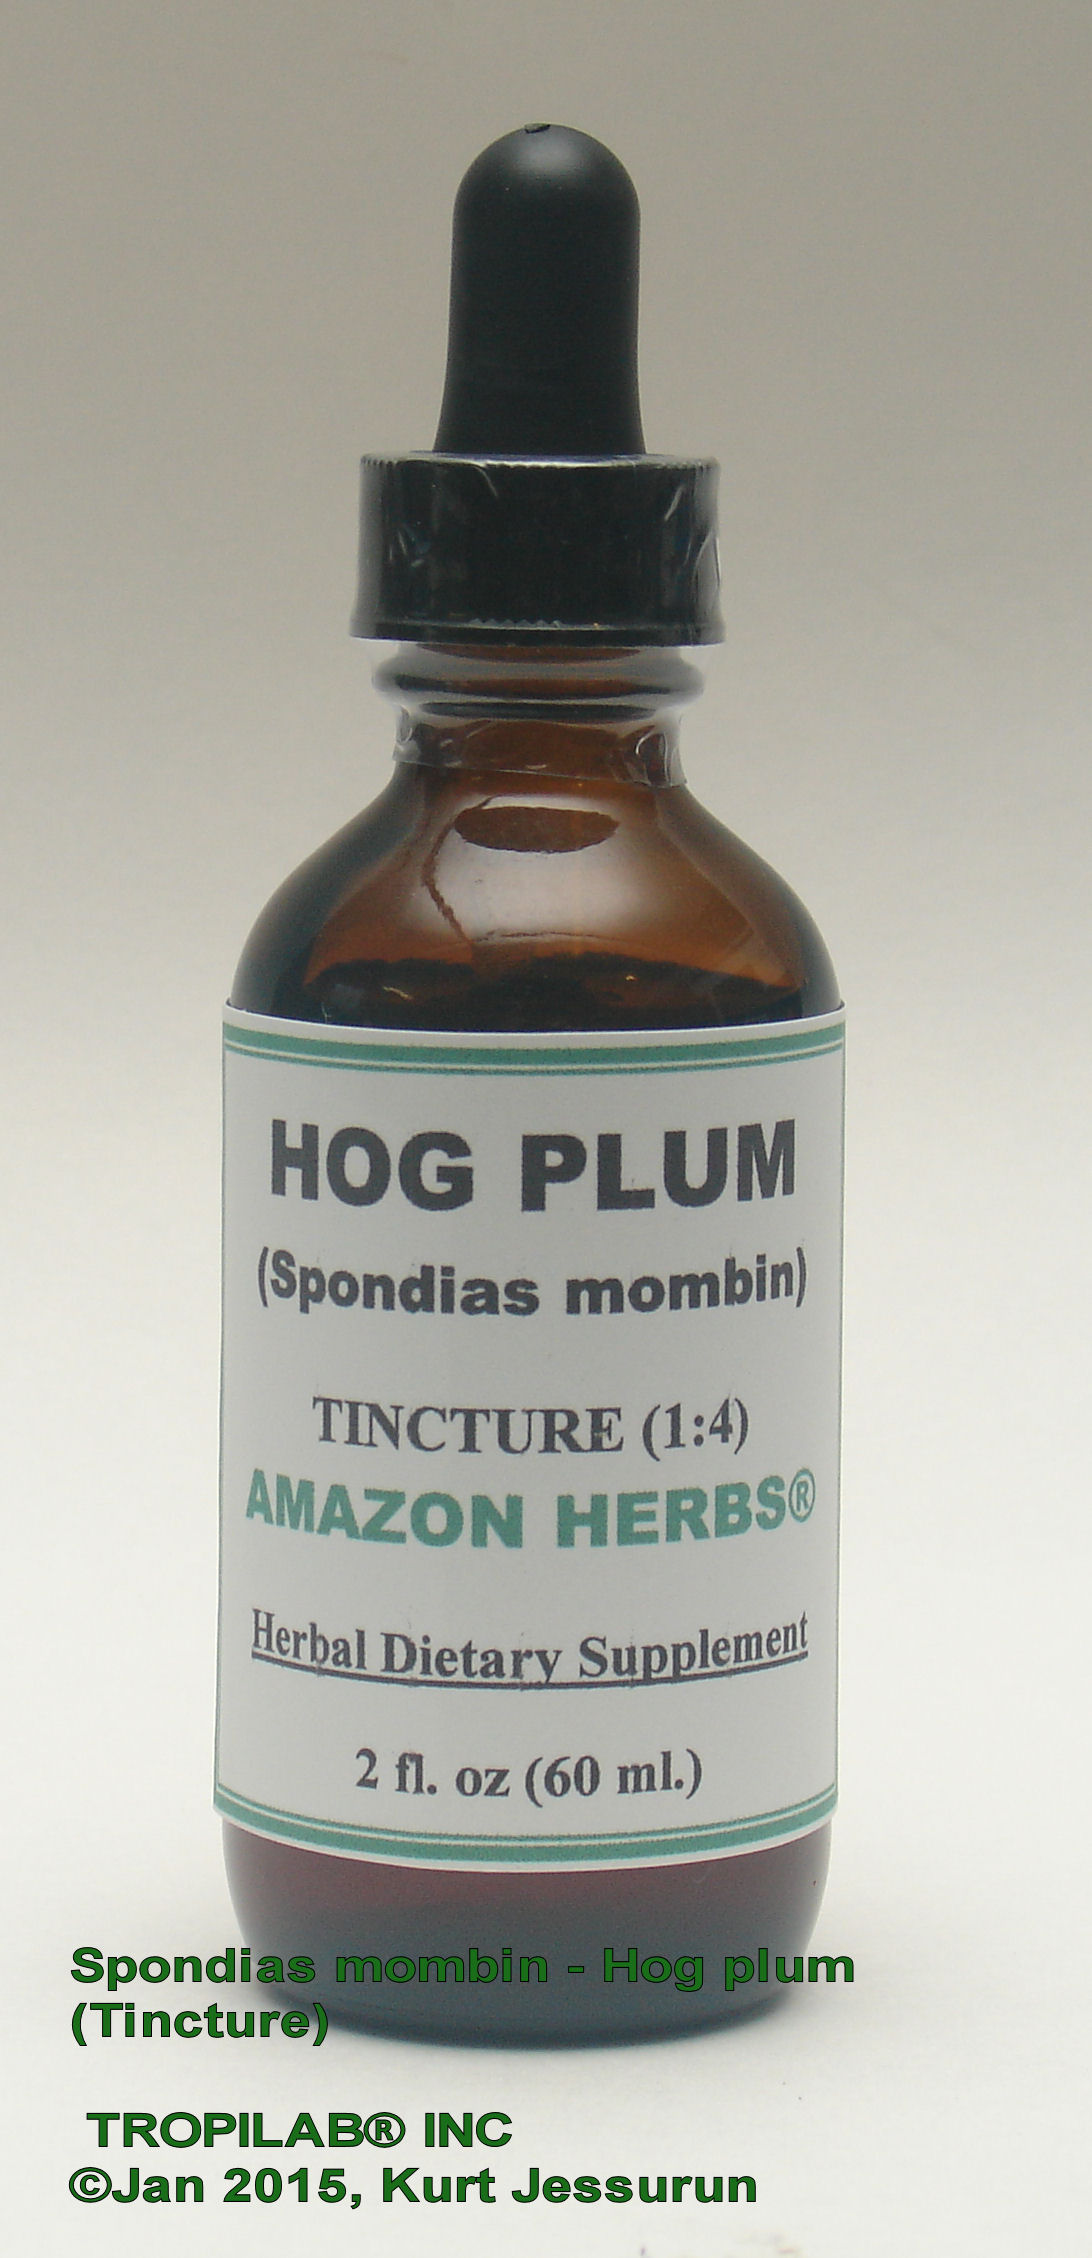 Spondias mombin- Hog plum herbal tincture - TROPILAB